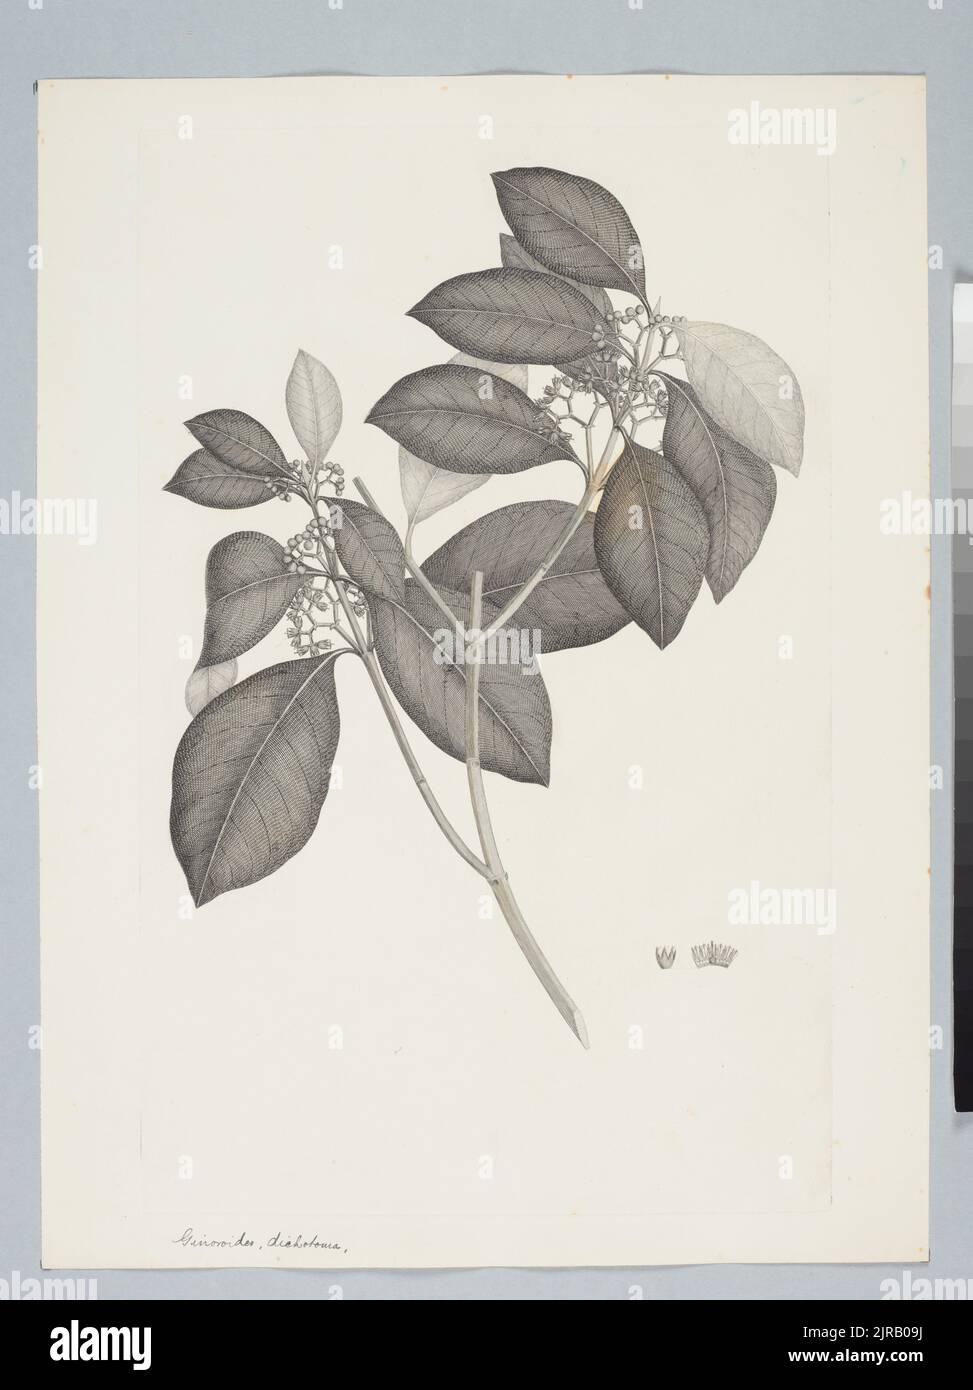 Carallia brachiata (Loureiro) Merrill, by Sydney Parkinson. Gift of the British Museum, 1895. Stock Photo